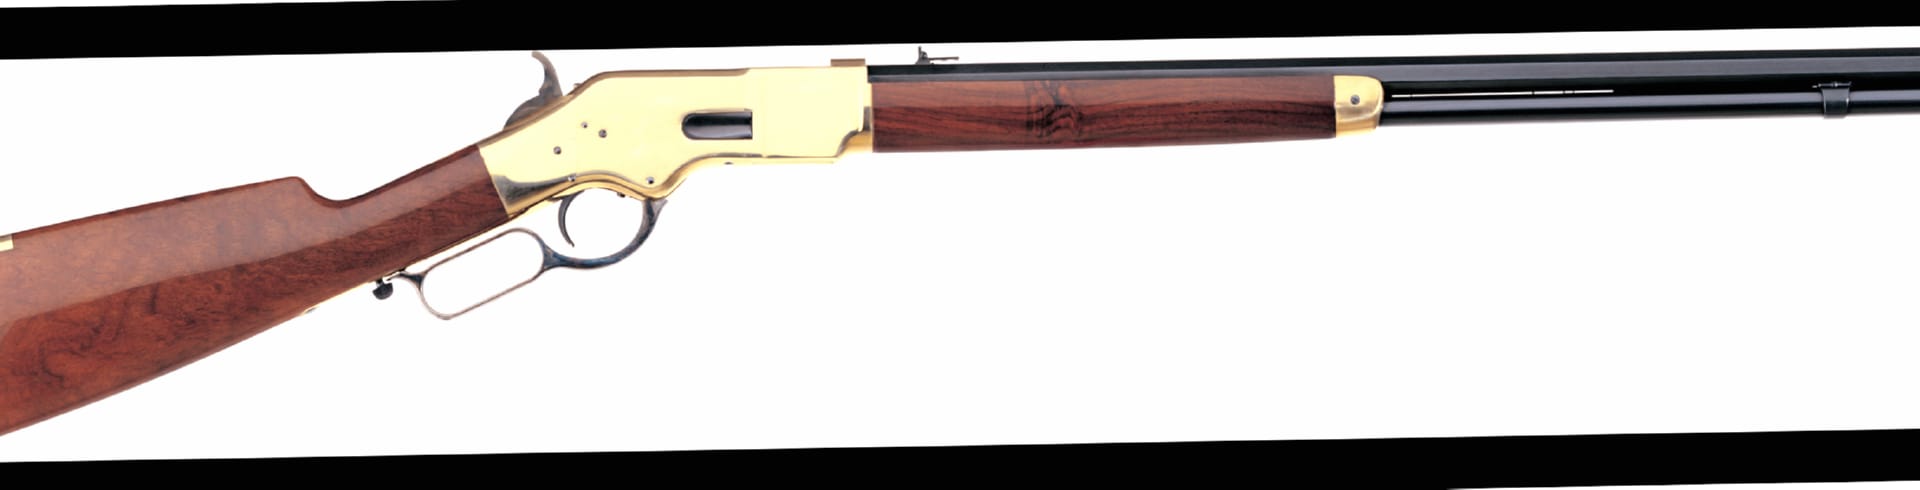 Uberti 1866 Yellowboy Rifle at 750 x 1334 iPhone 6 size wallpapers HD quality